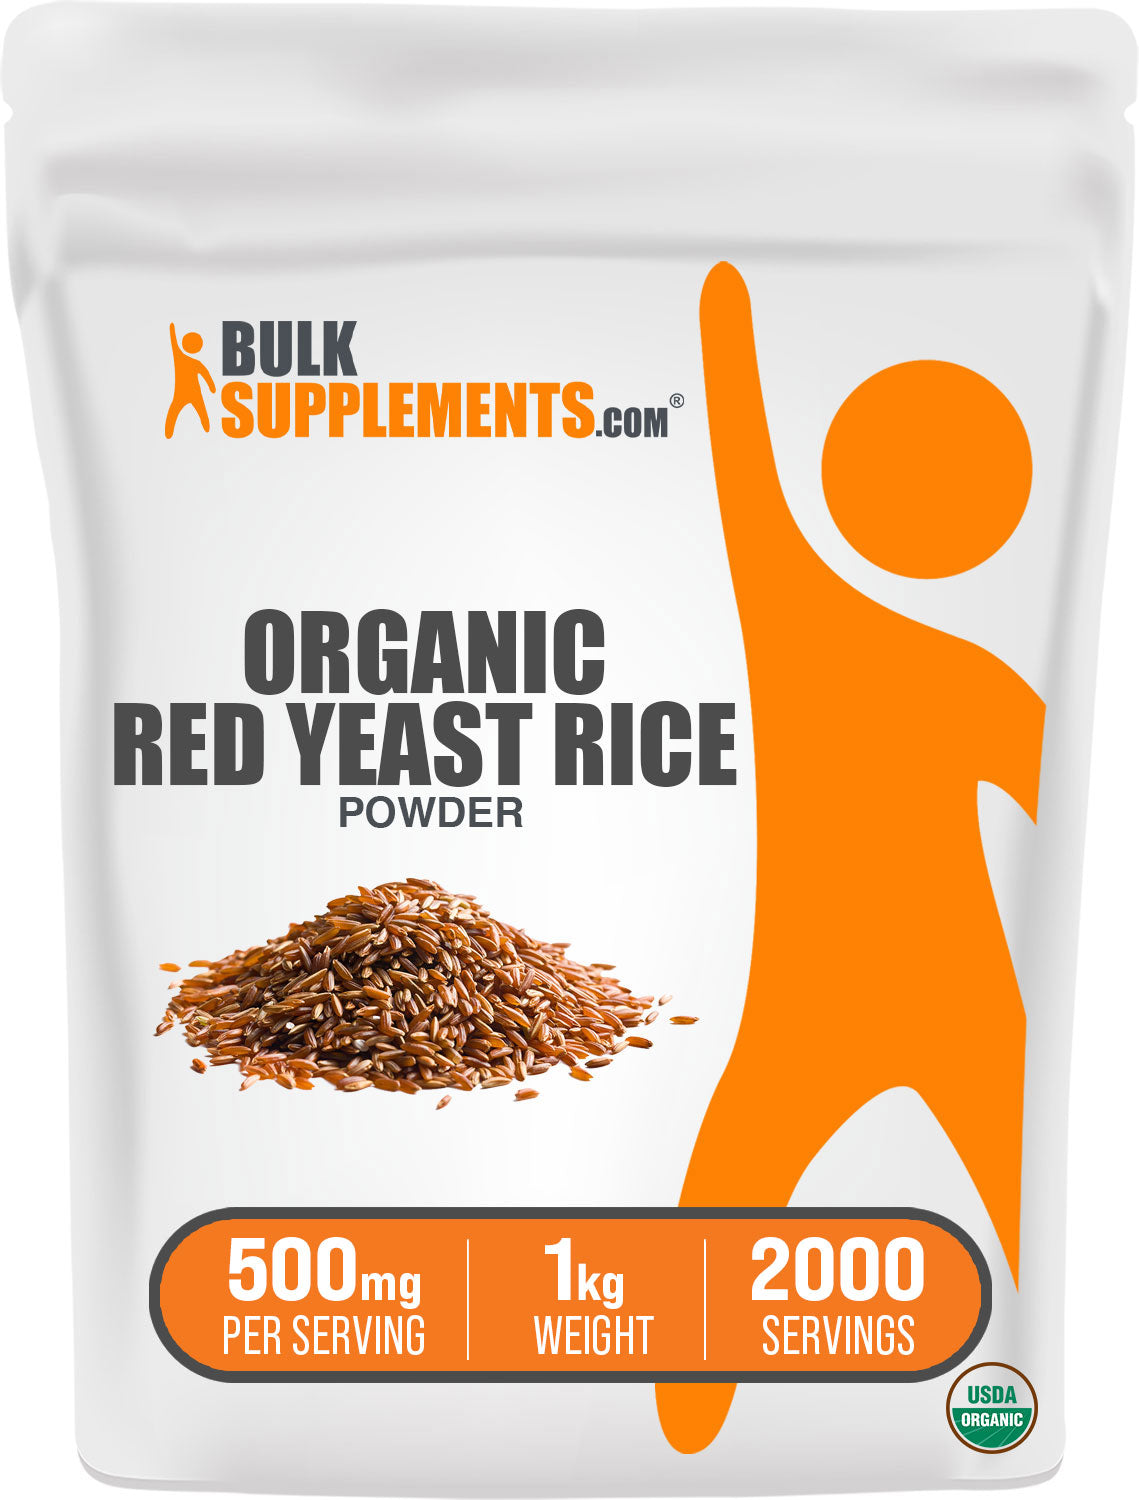 BulkSupplements.com Organic Red Yeast Rice Powder 1kg Bag